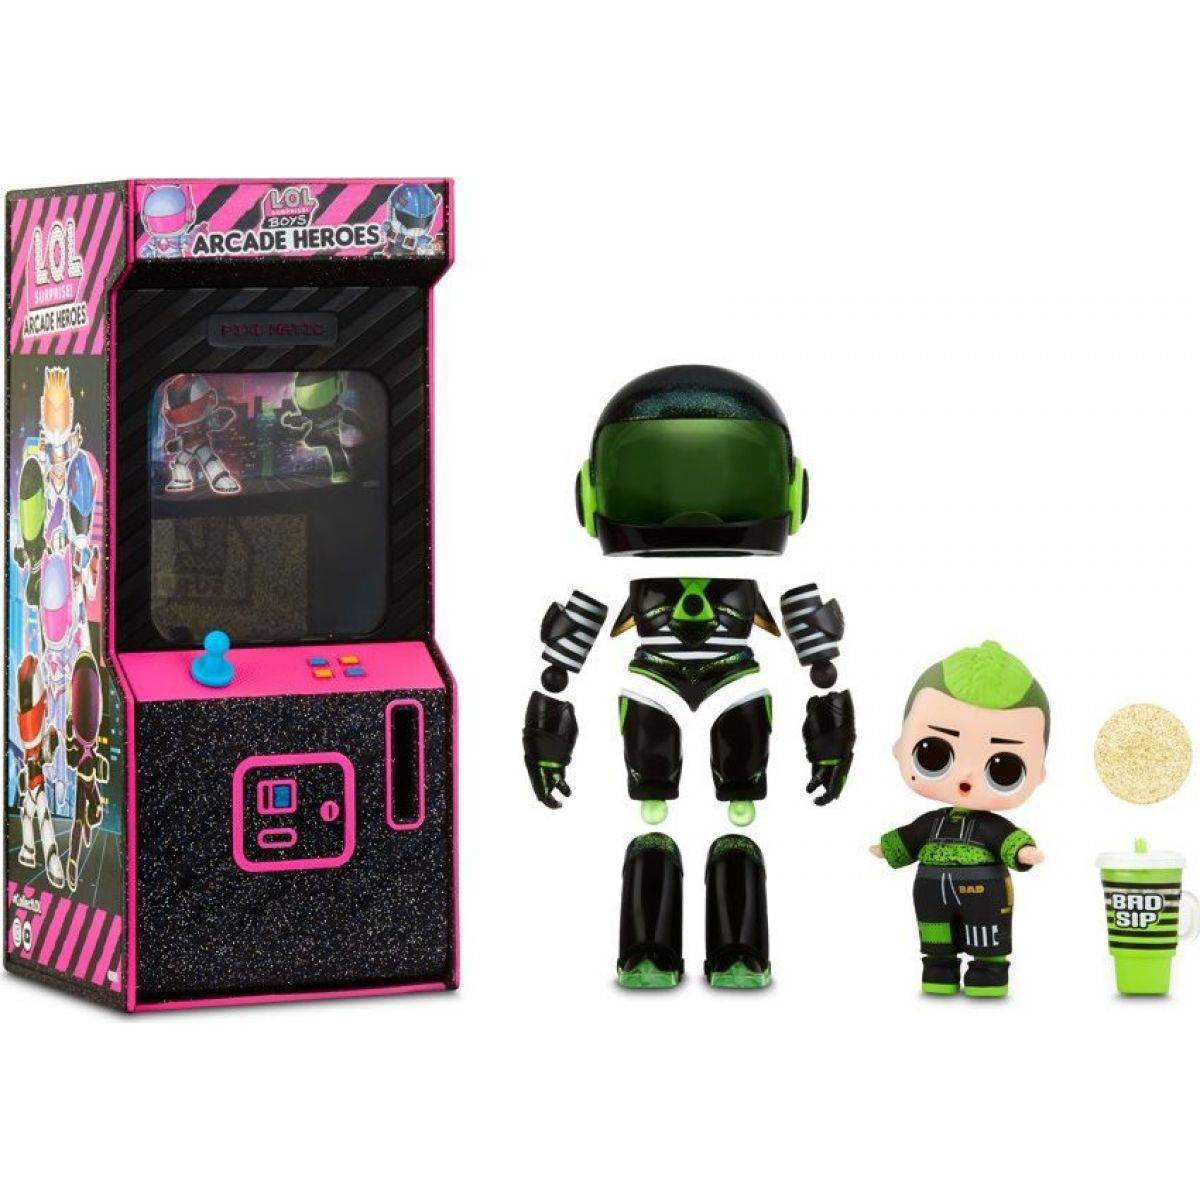 Купить L.O.L. Surprise Кукла Arcade Heroes, Bhaddi Bro 569367/2,